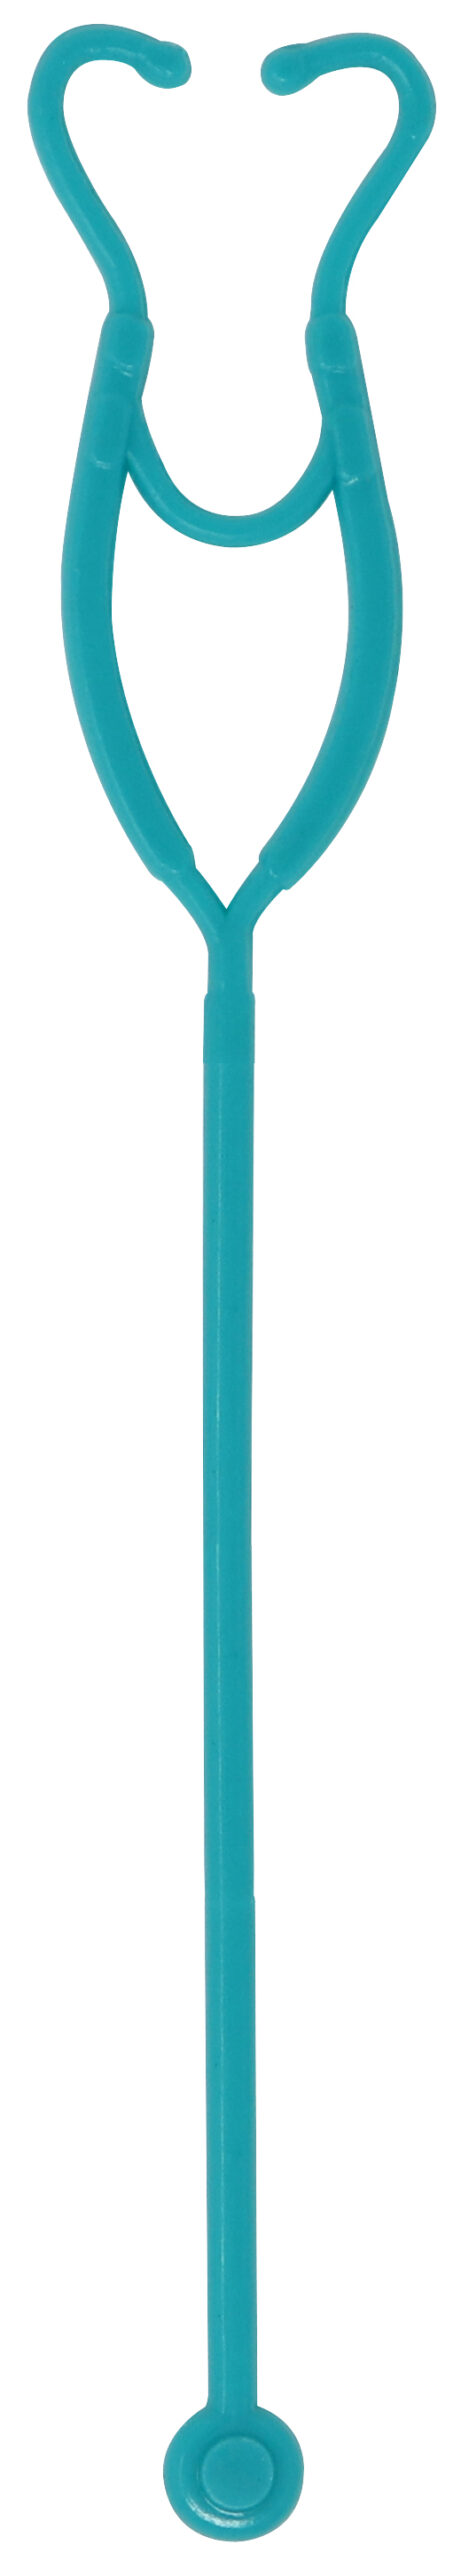 Blue Stethoscope shaped stir stick